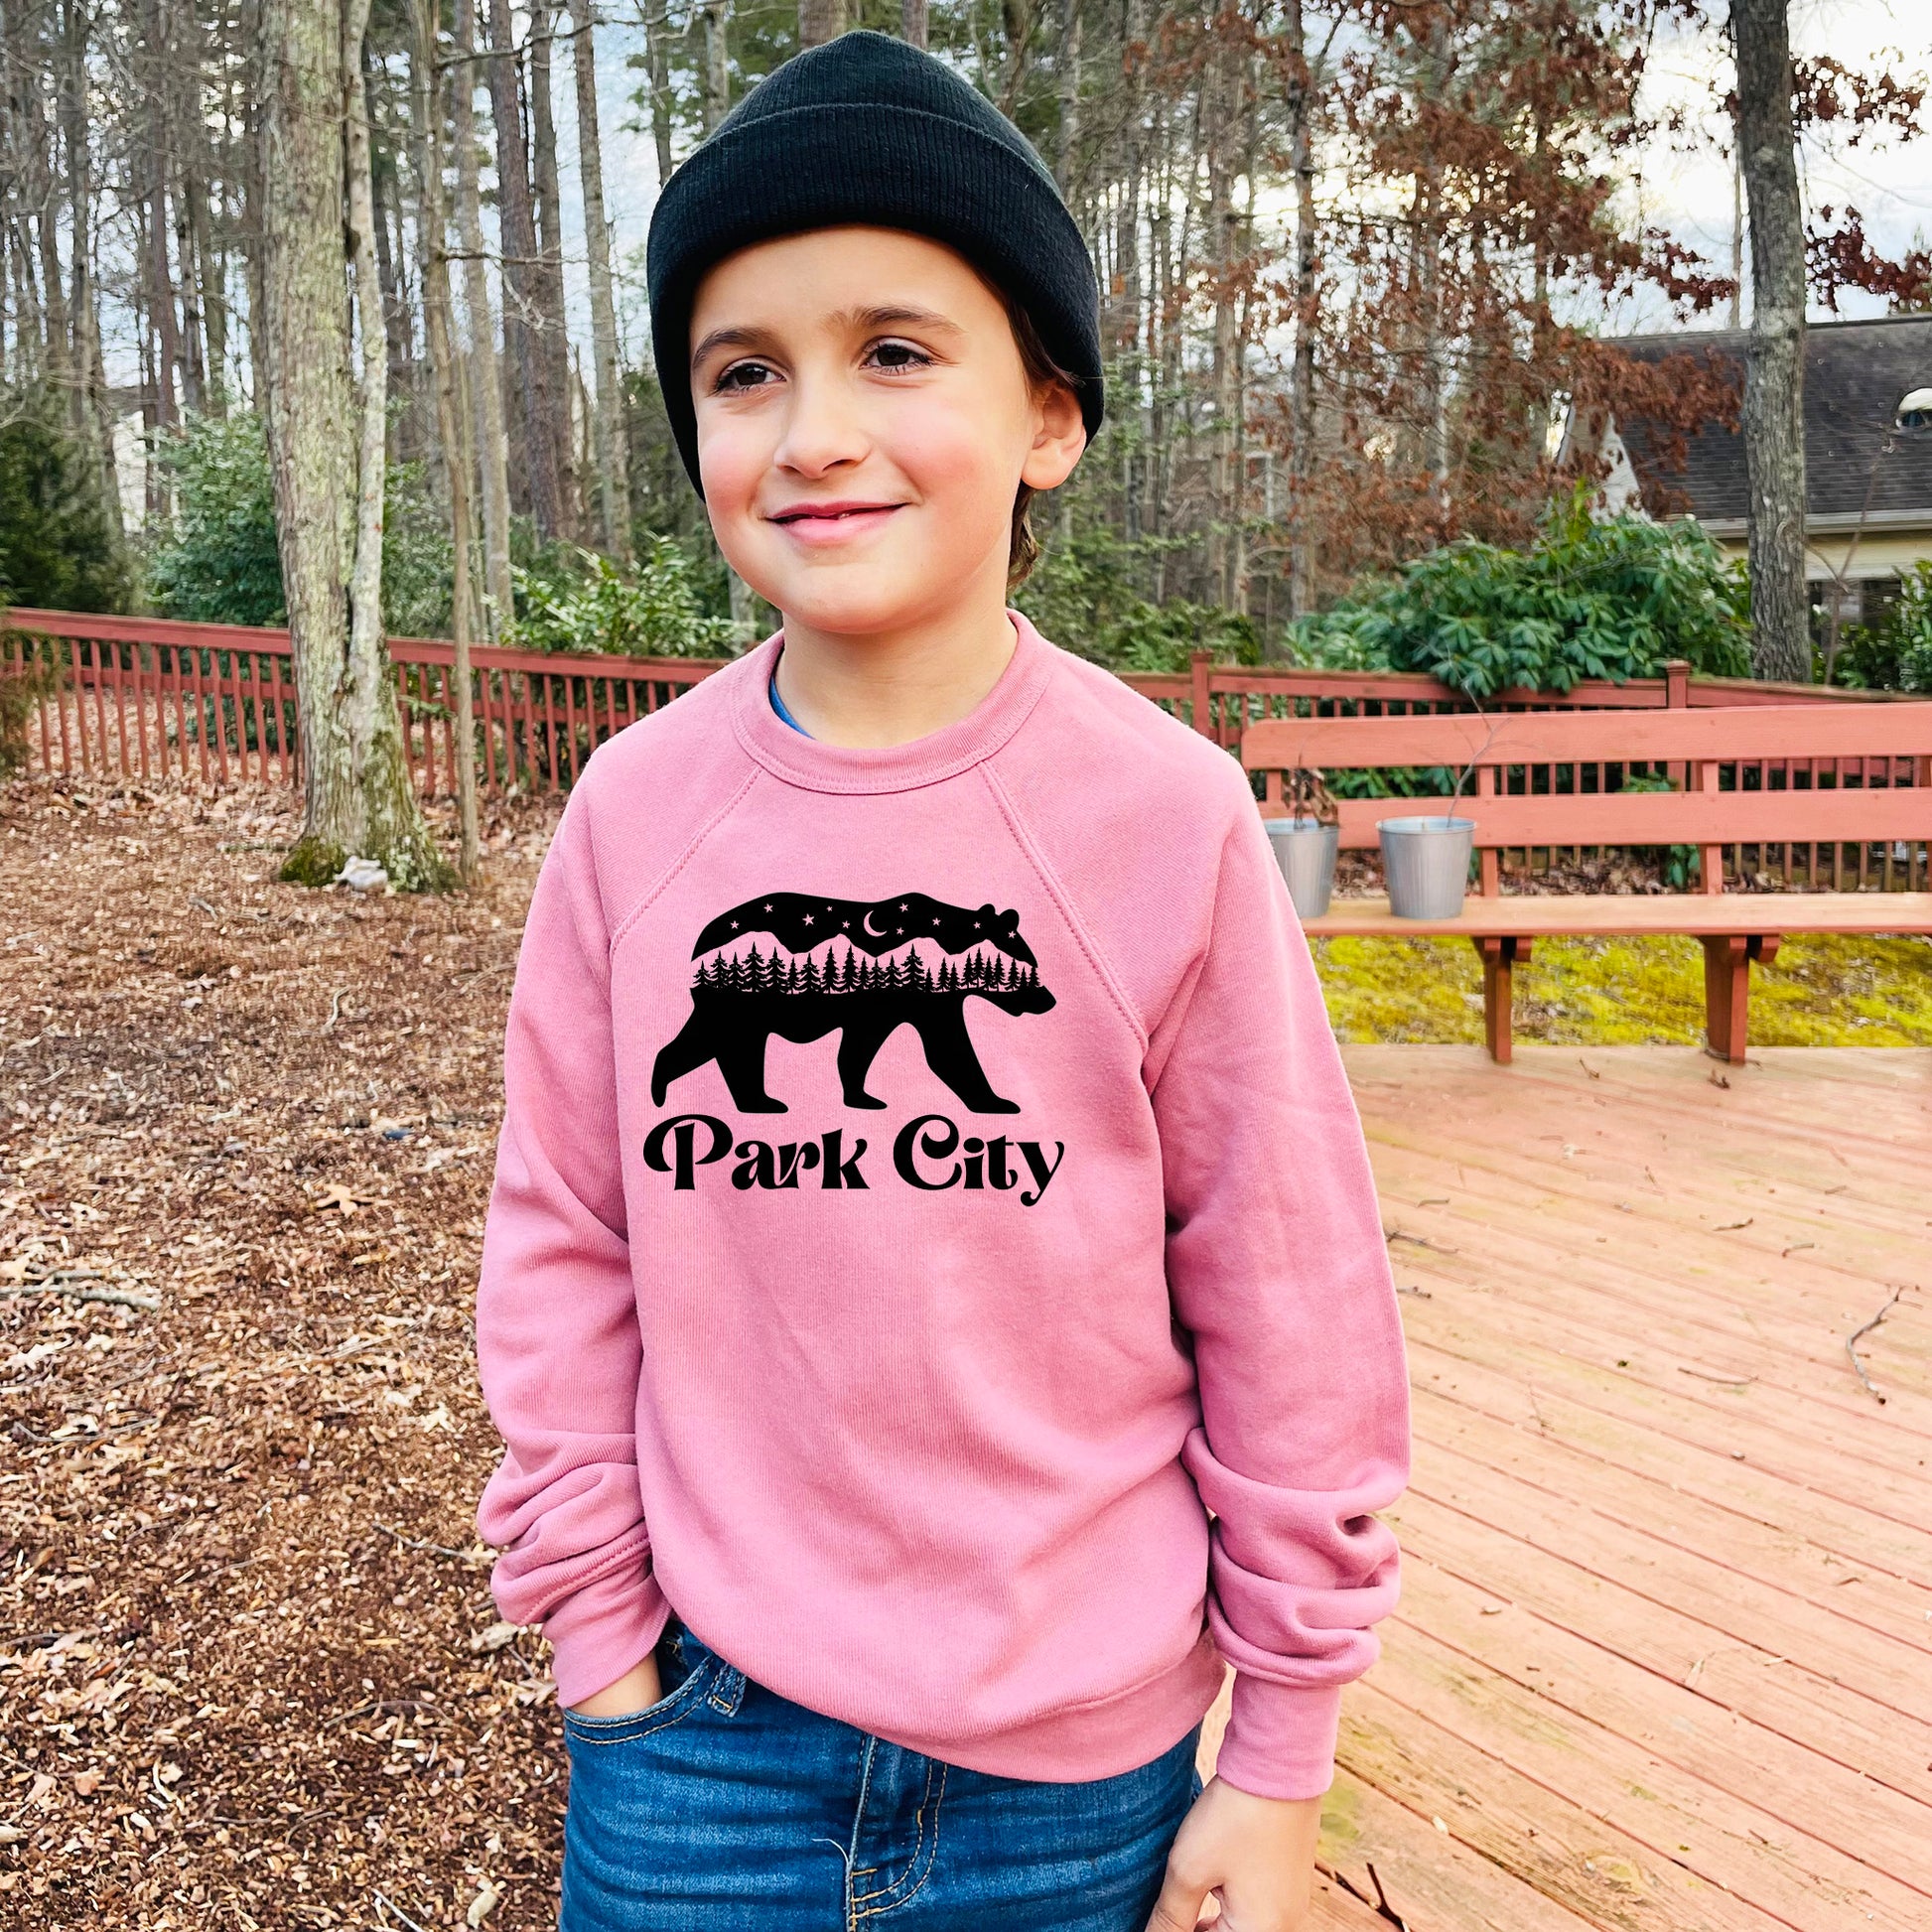 a young boy wearing a pink park city sweatshirt